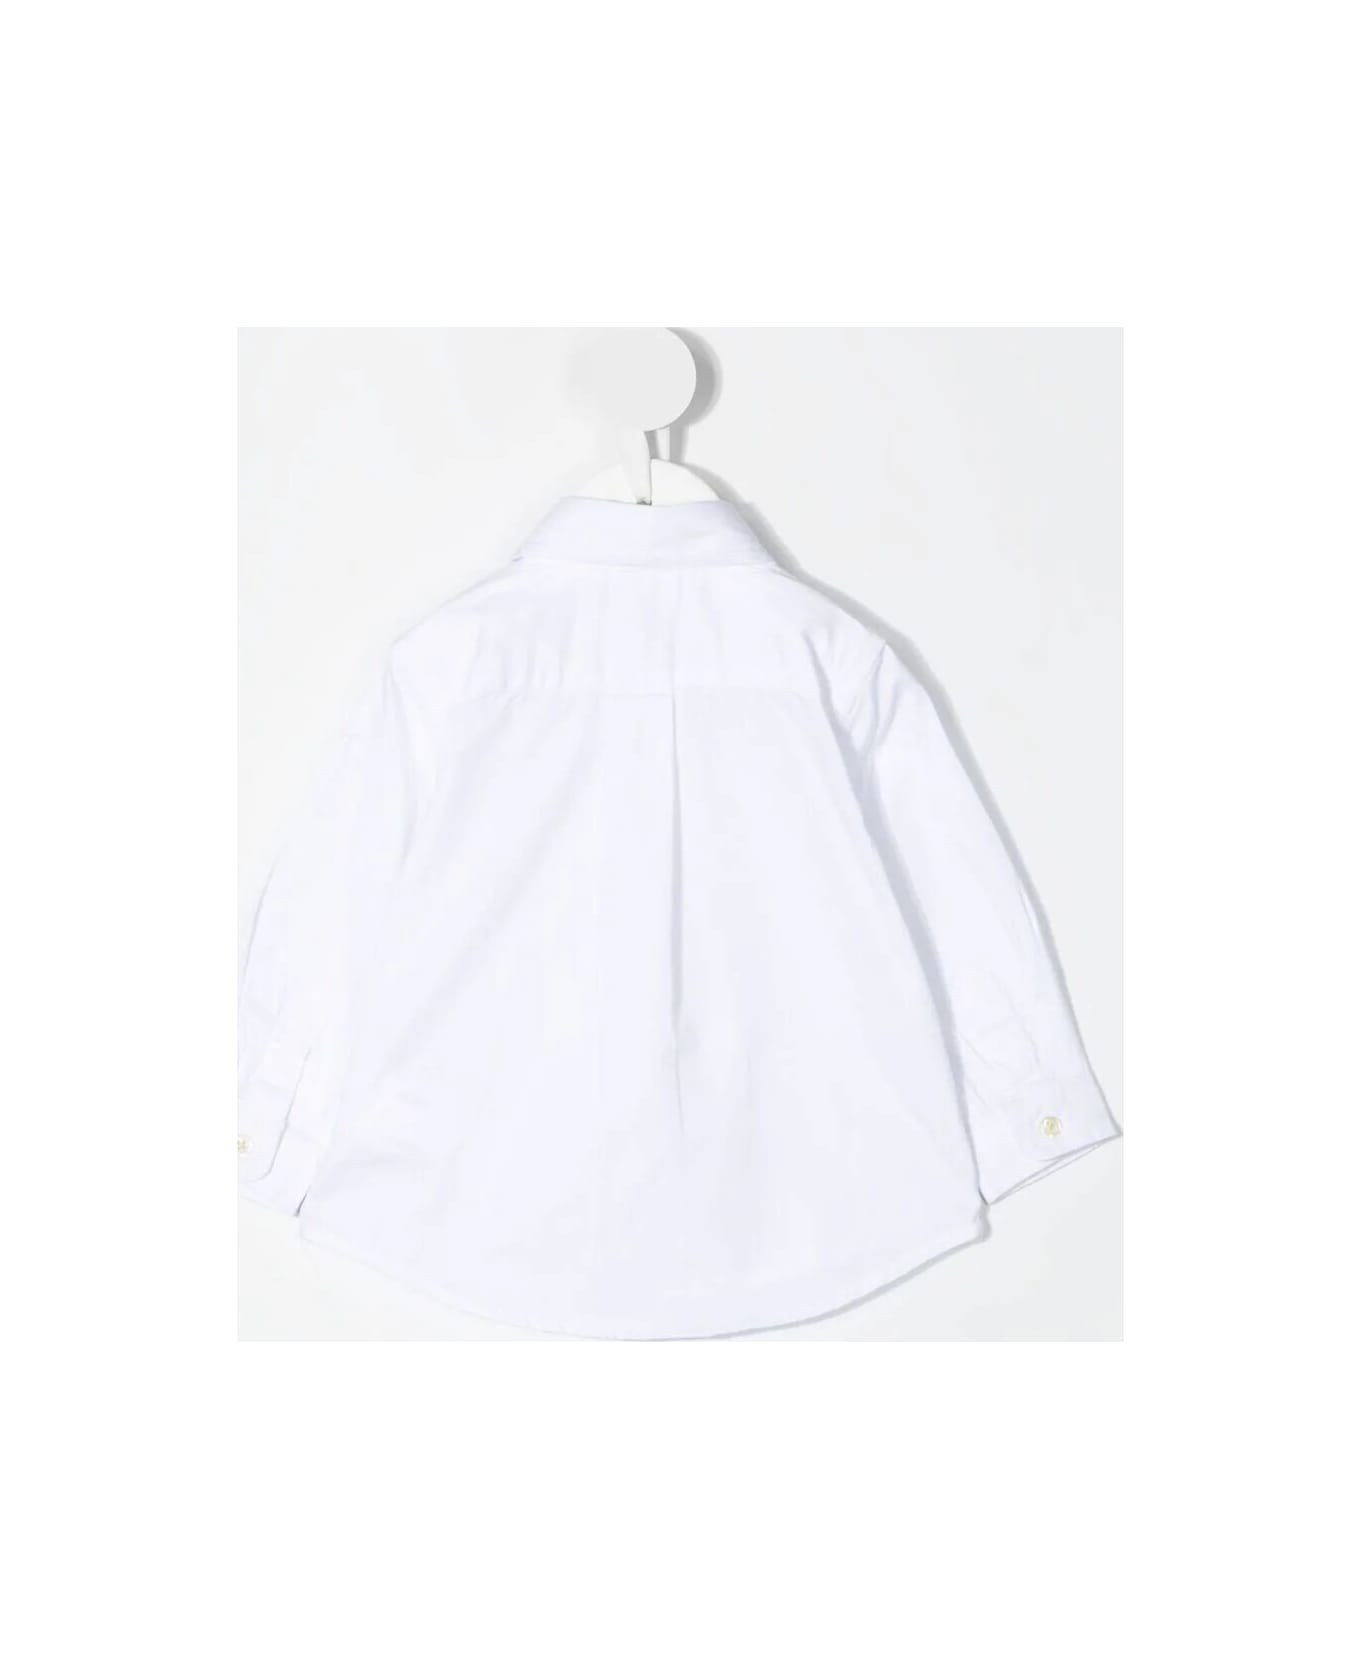 Polo Ralph Lauren Slim Fit Tops Shirt - White